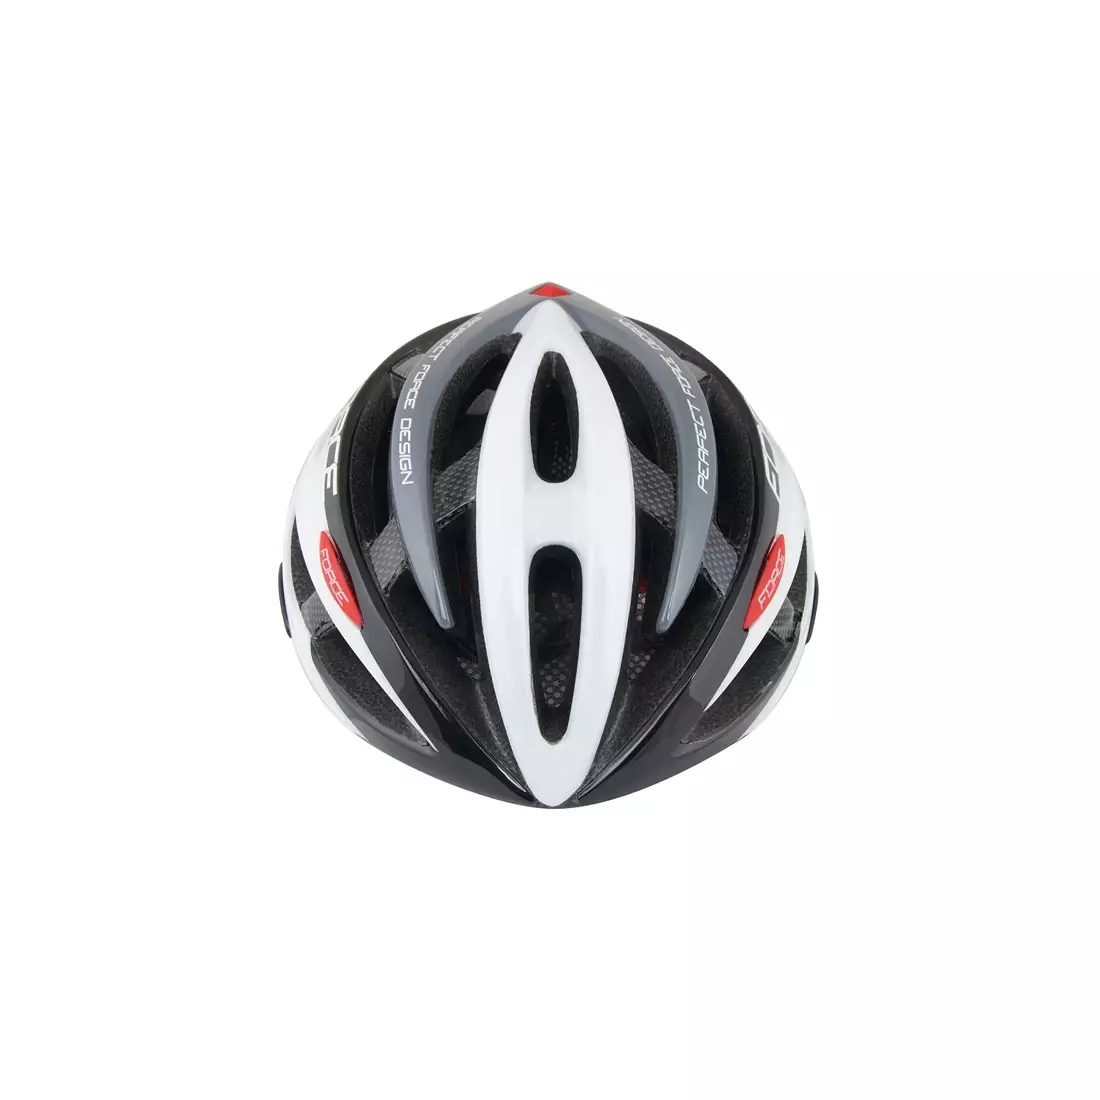 FORCE cyklistická helma, bílá a stříbrná 902613(14)